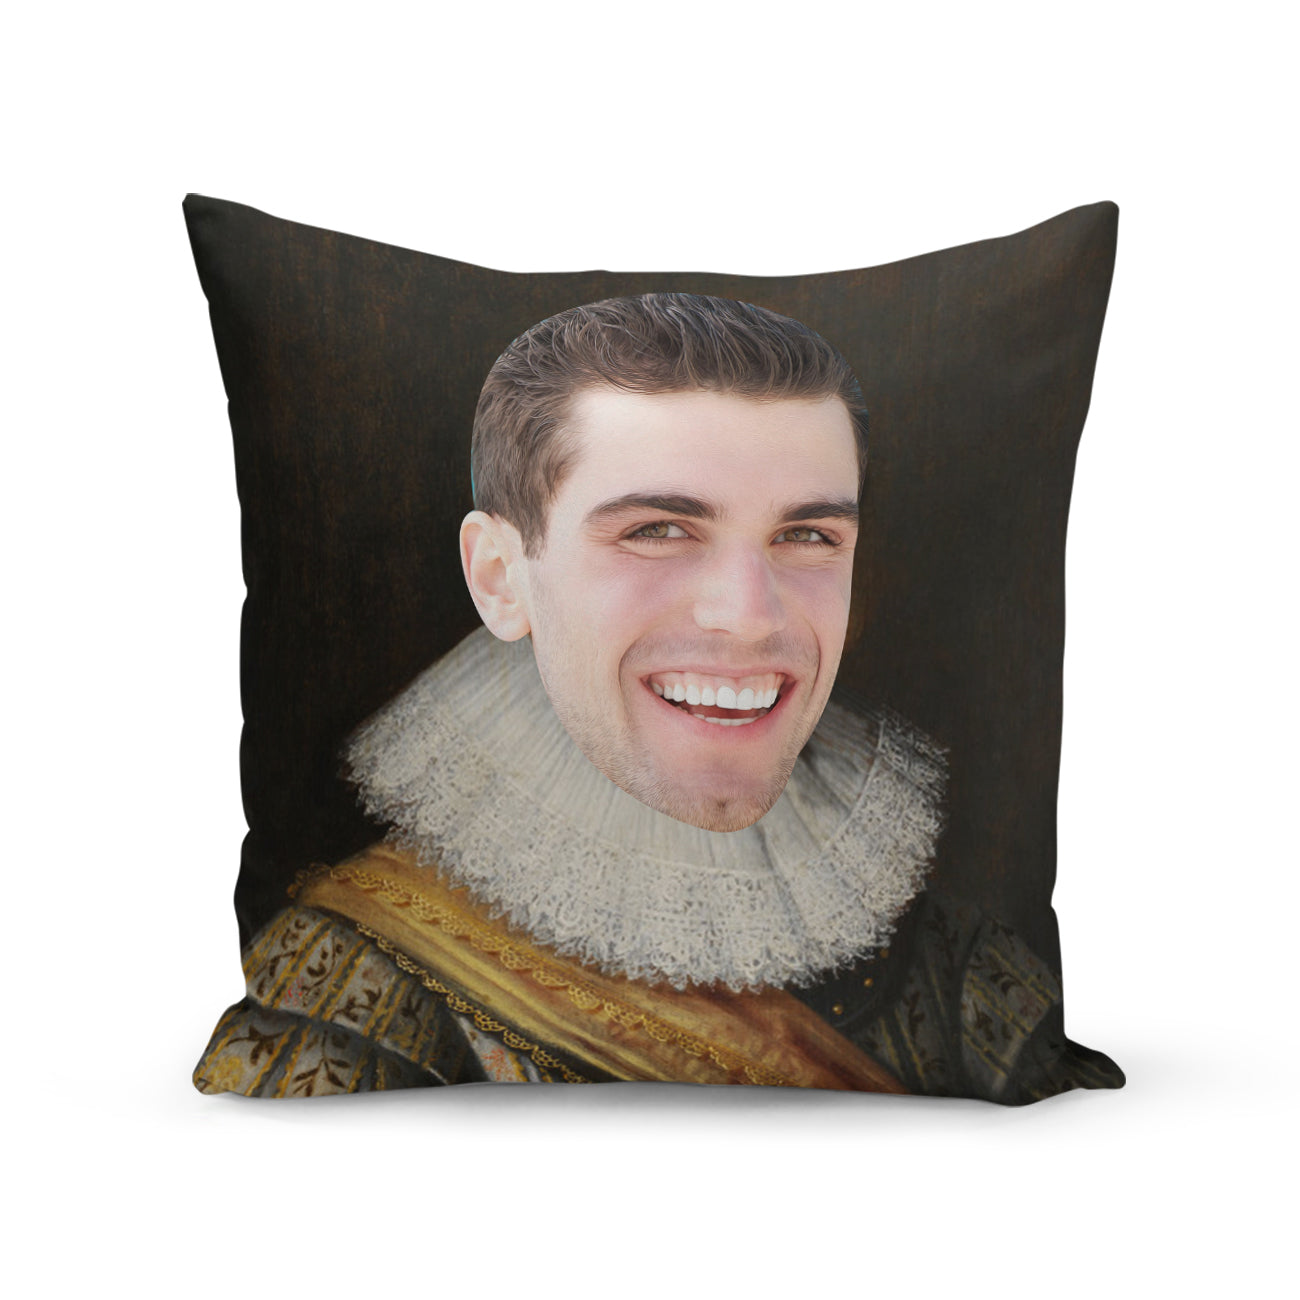 The Noble Cushion